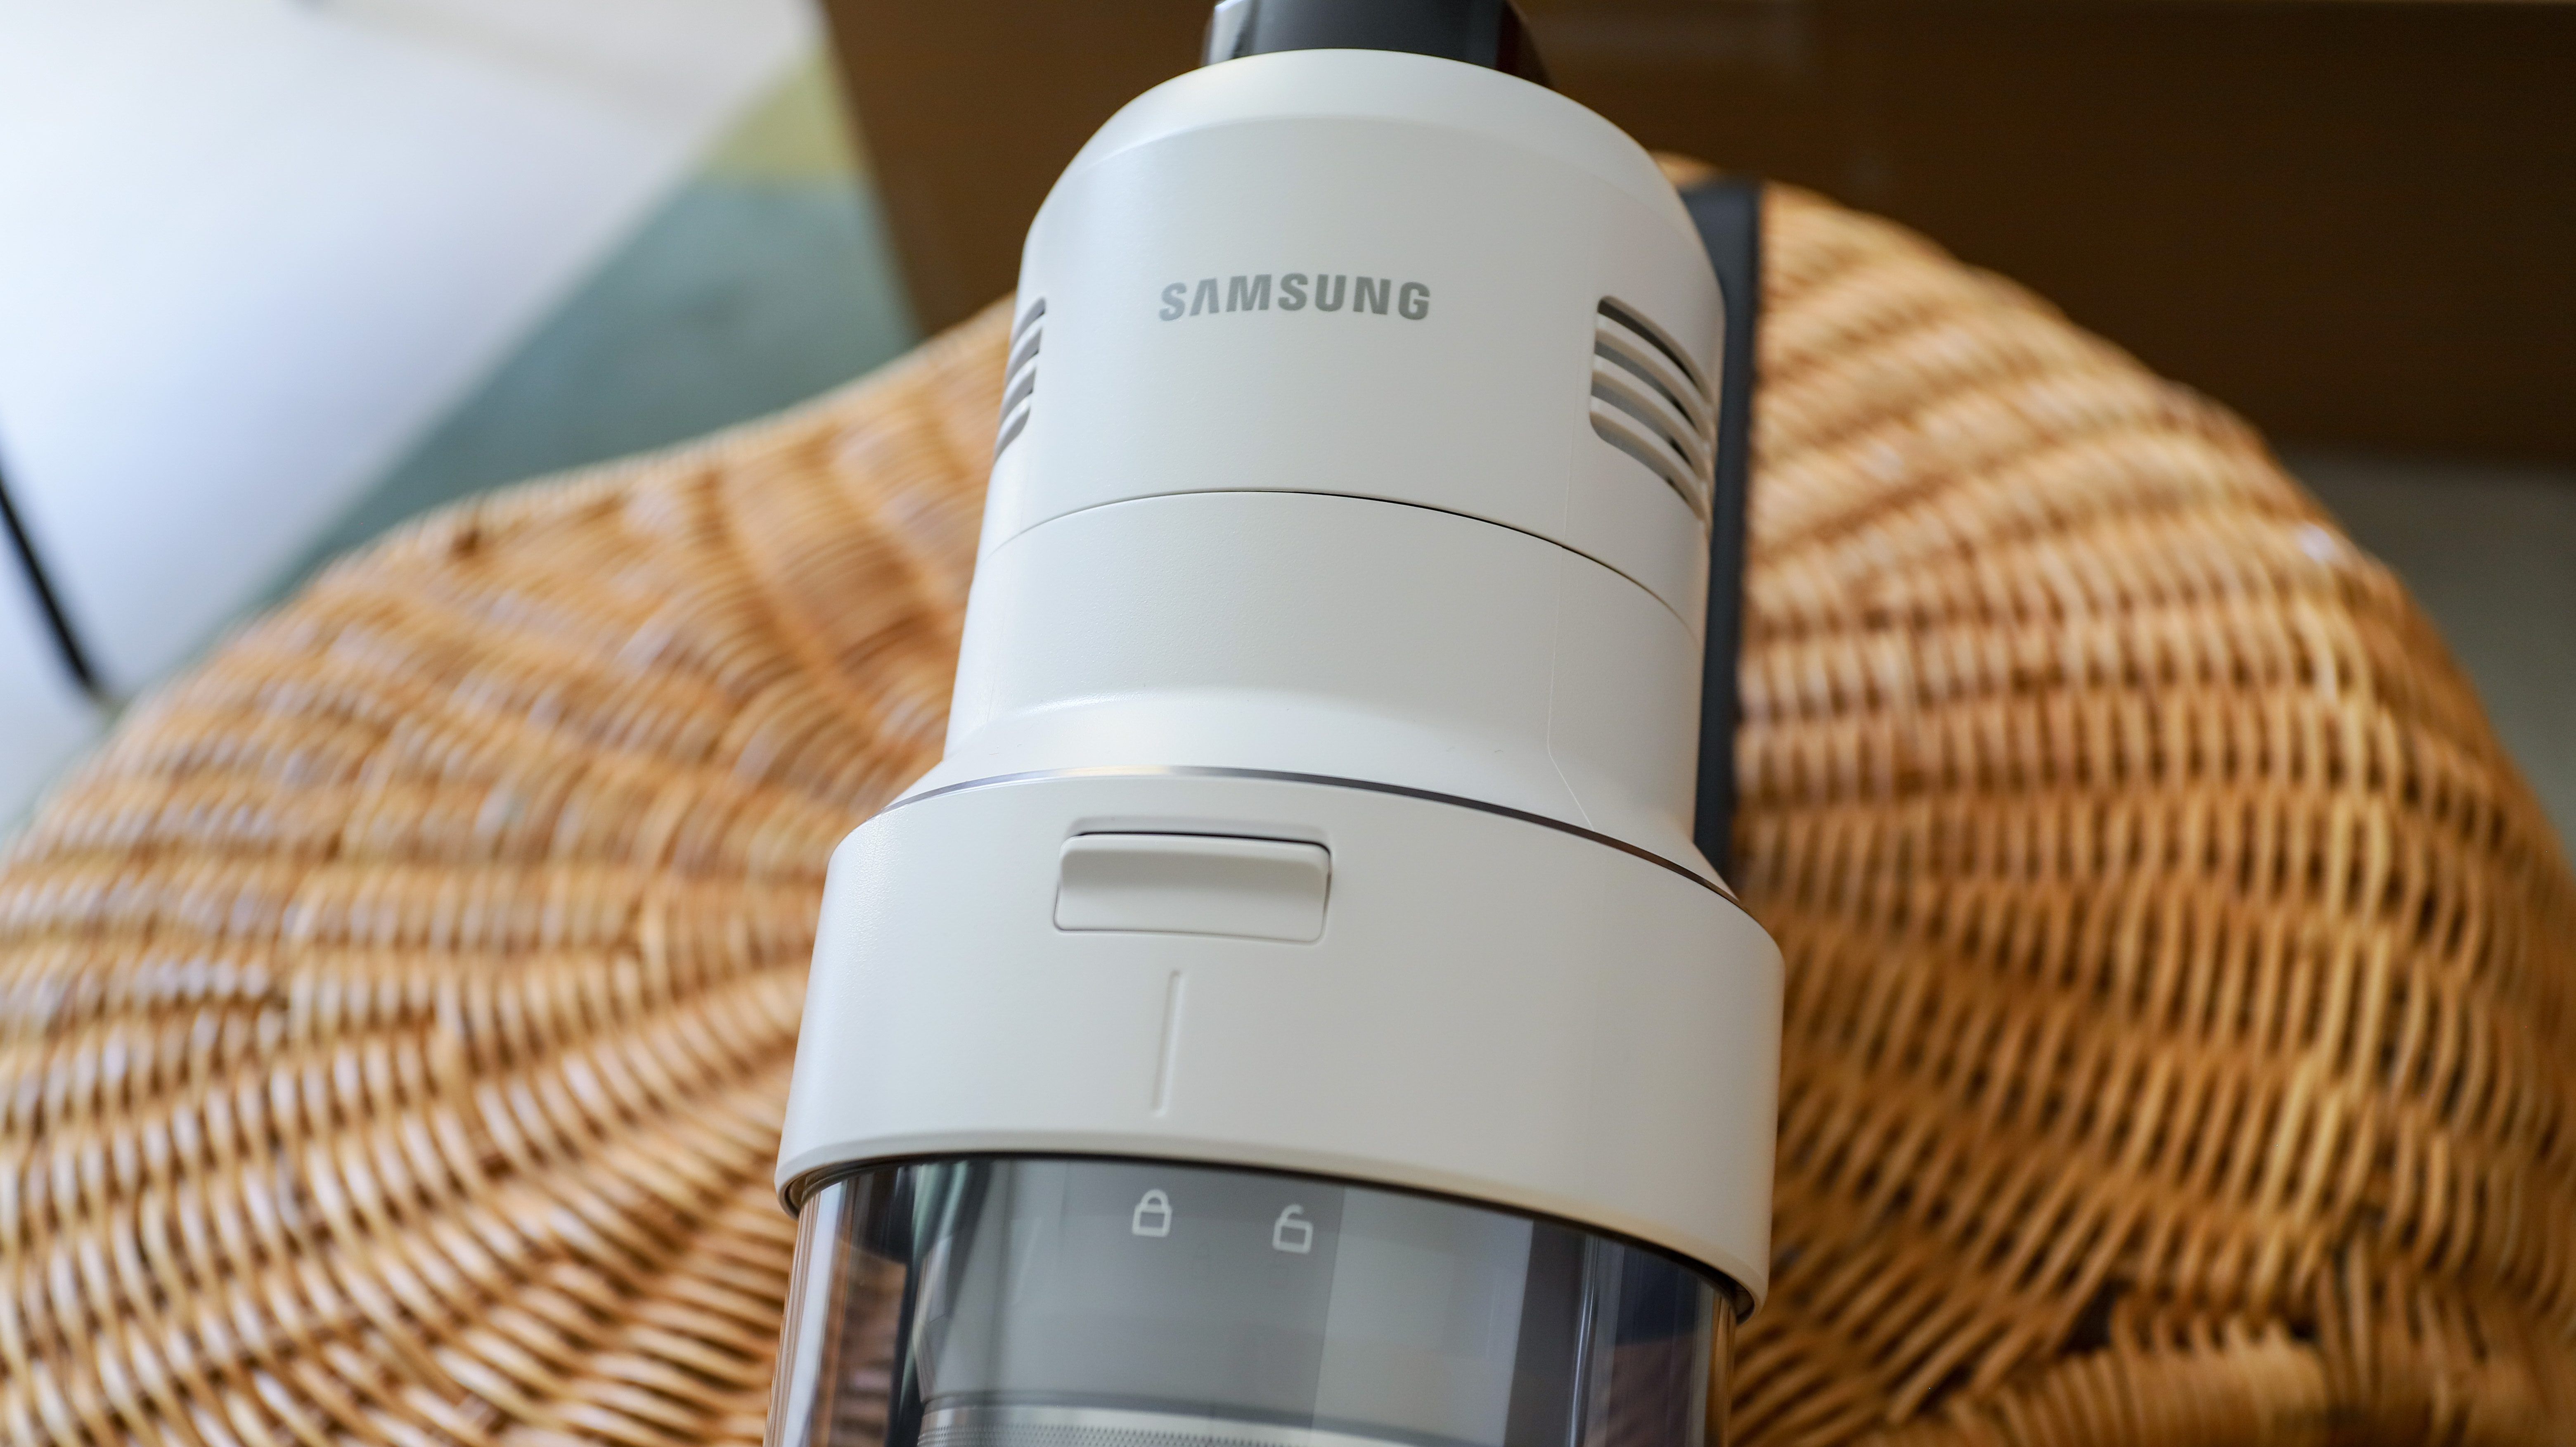 Samsung branding on the Bespoke Jet AI filter casing